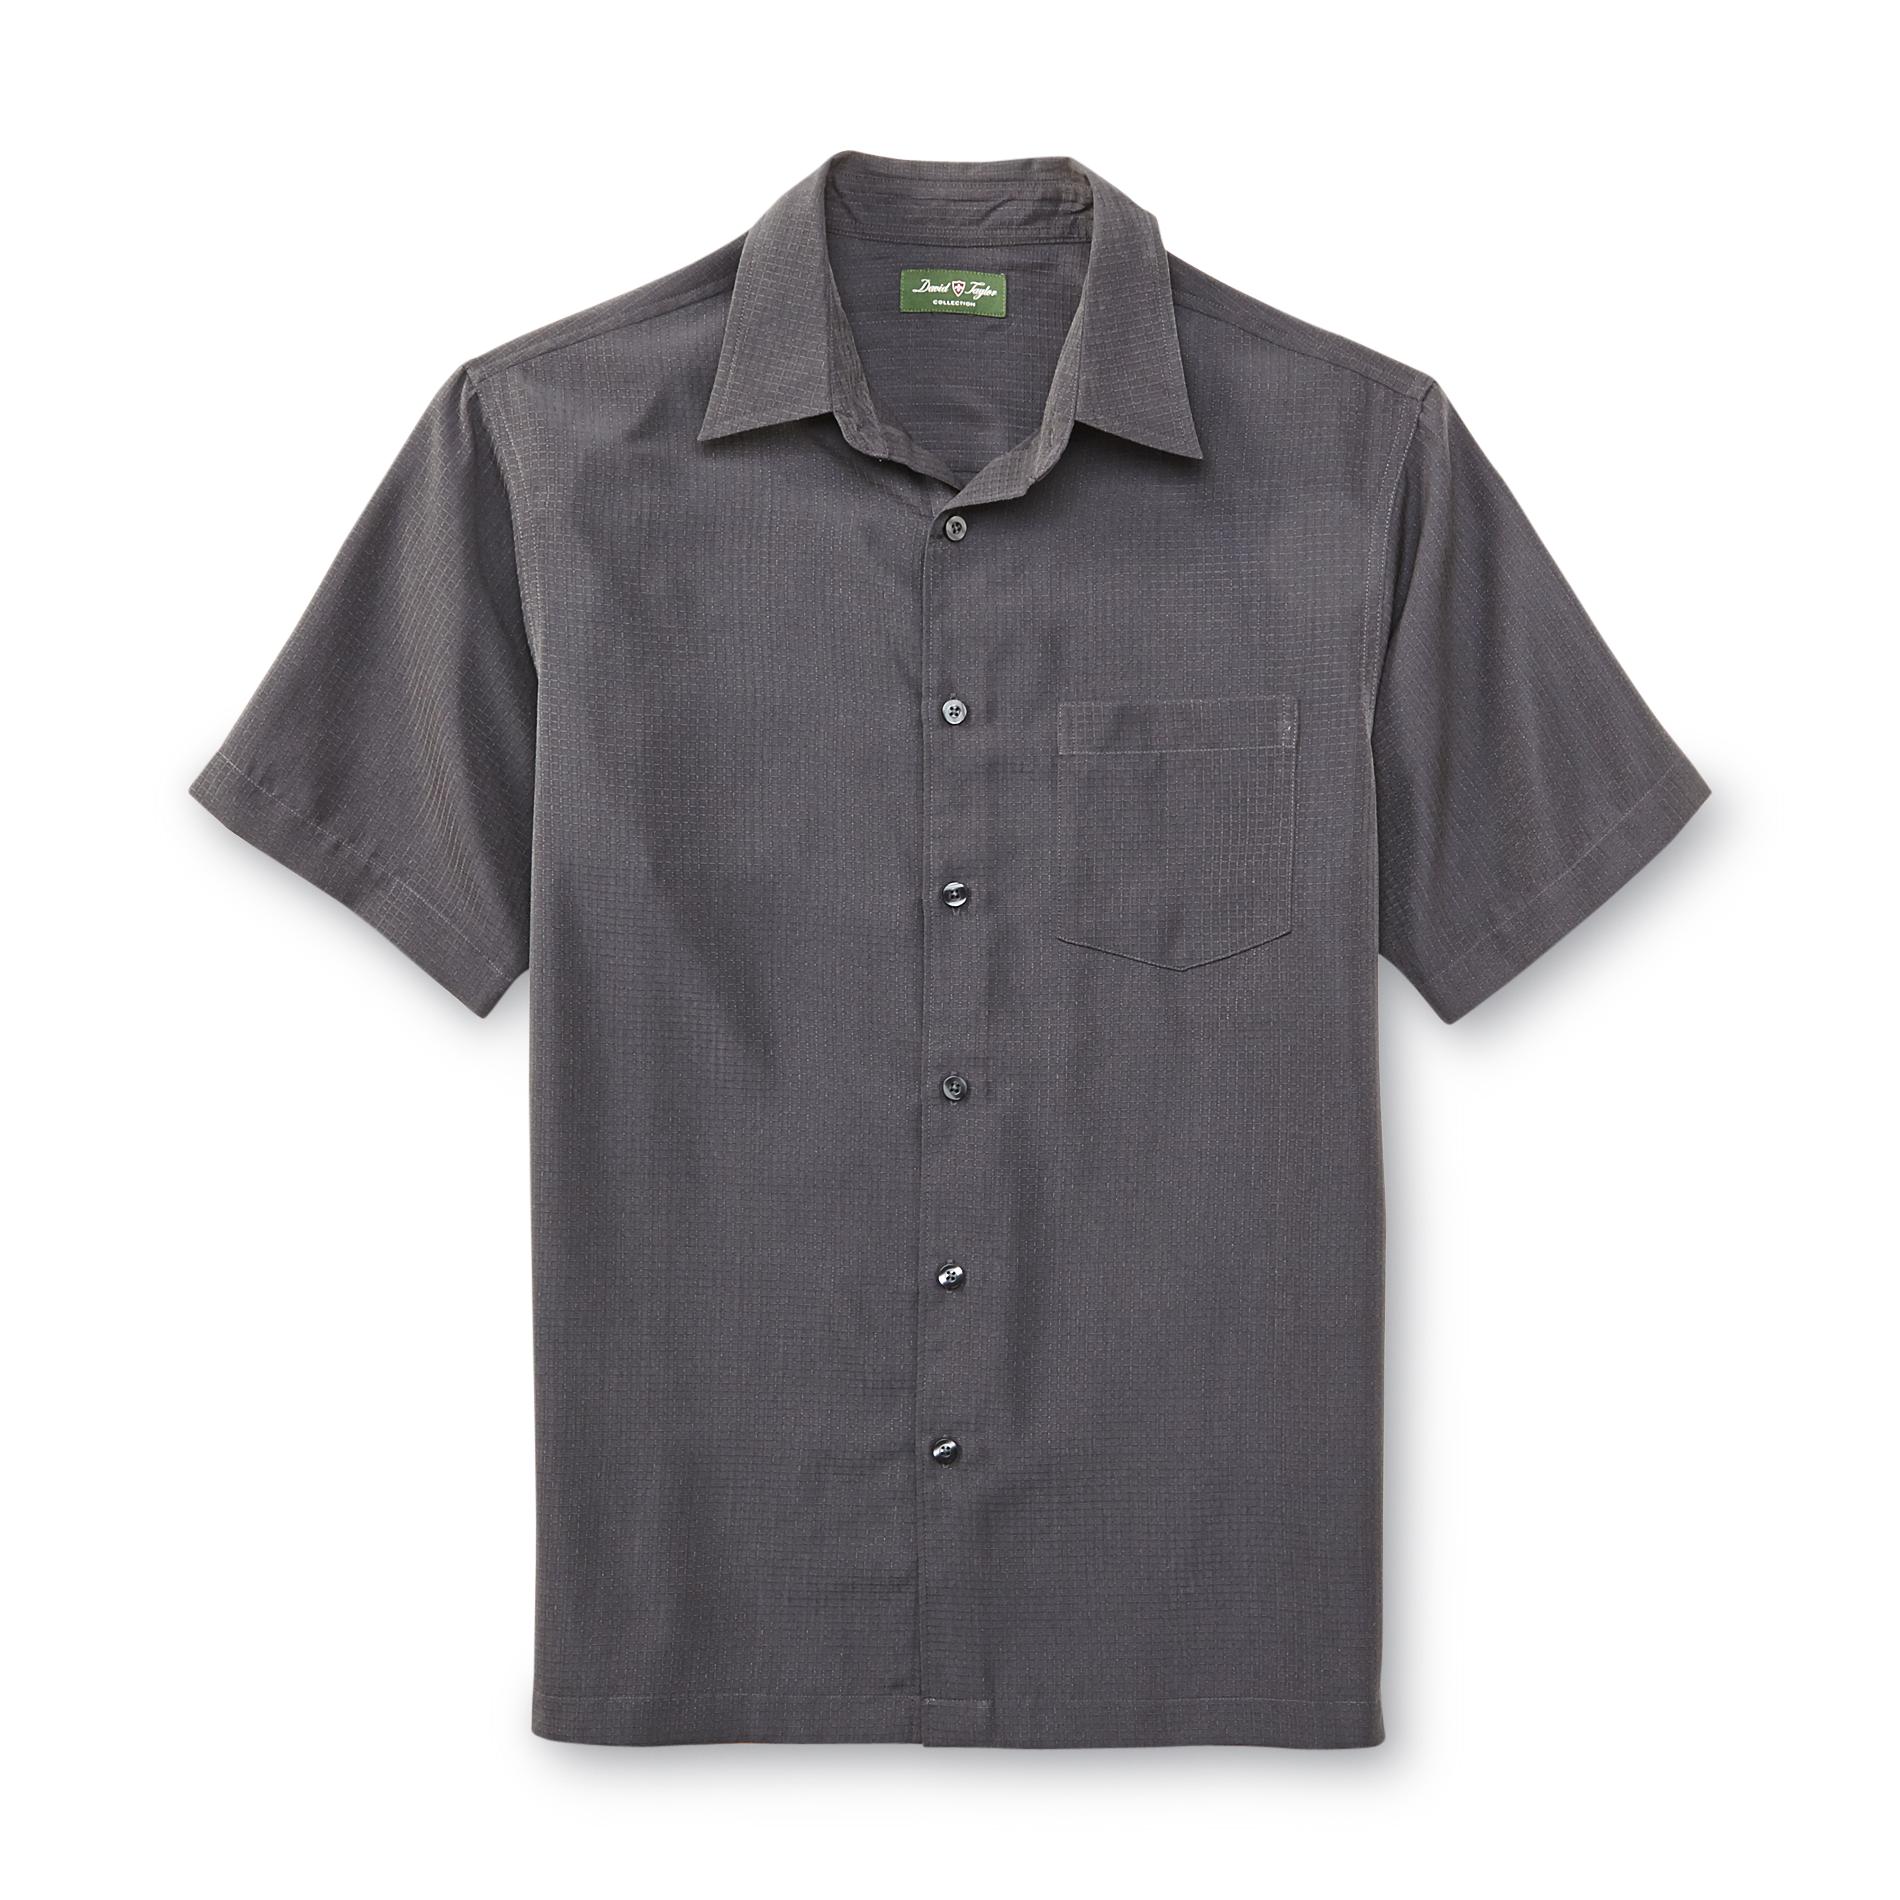 David Taylor Collection Men's Short-Sleeve Casual Shirt - Textured Check